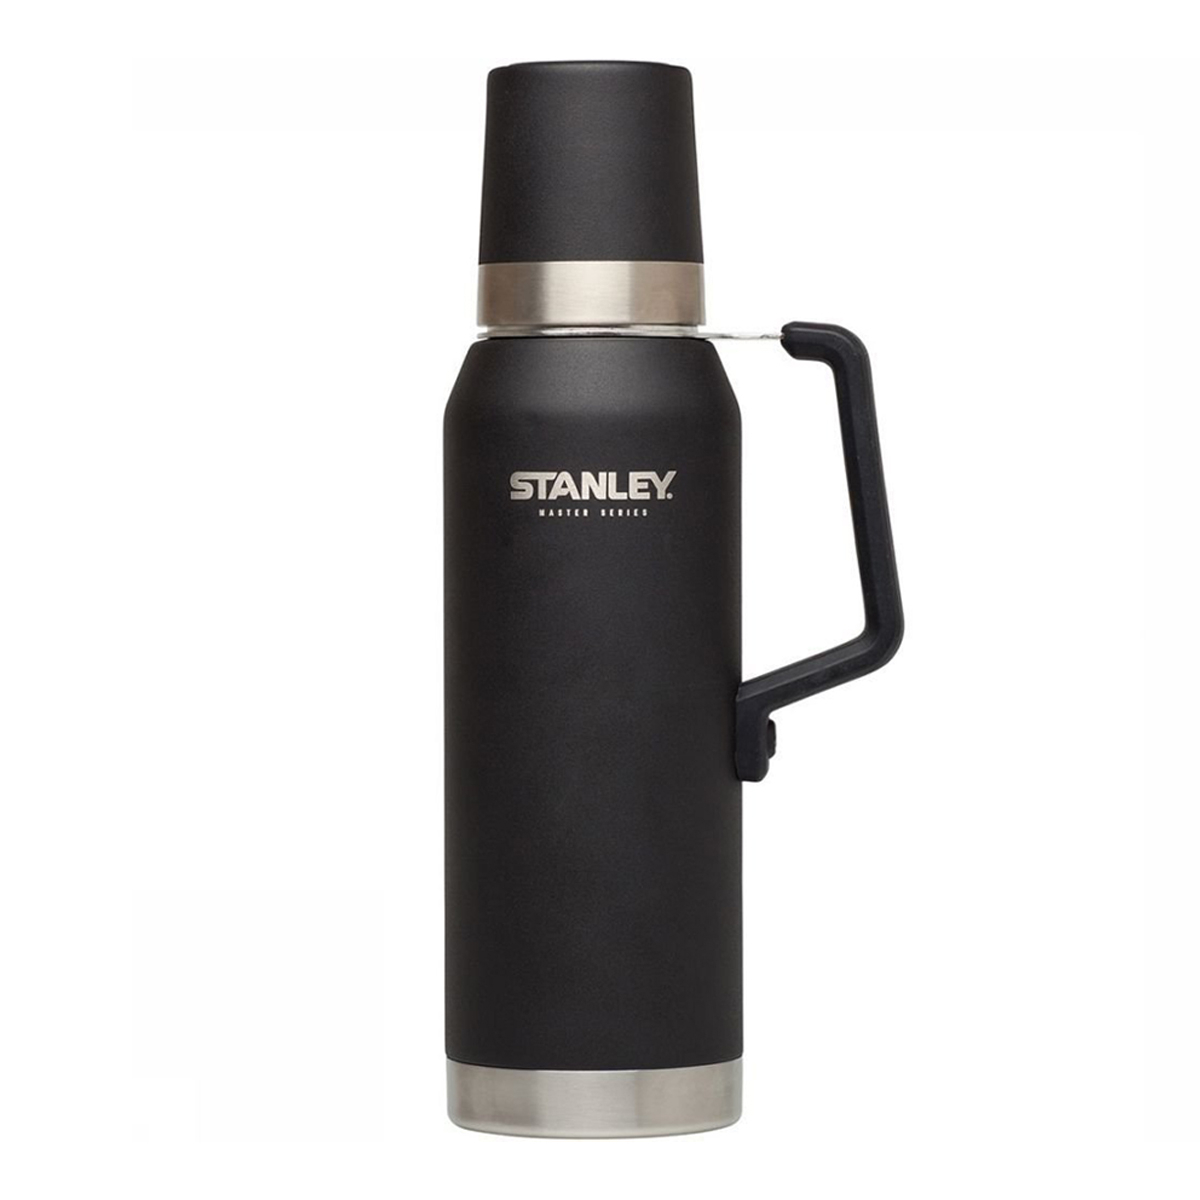 Filson Stanley Master Unbreakable Thermal Bottle 1.4 QT | 1.3L